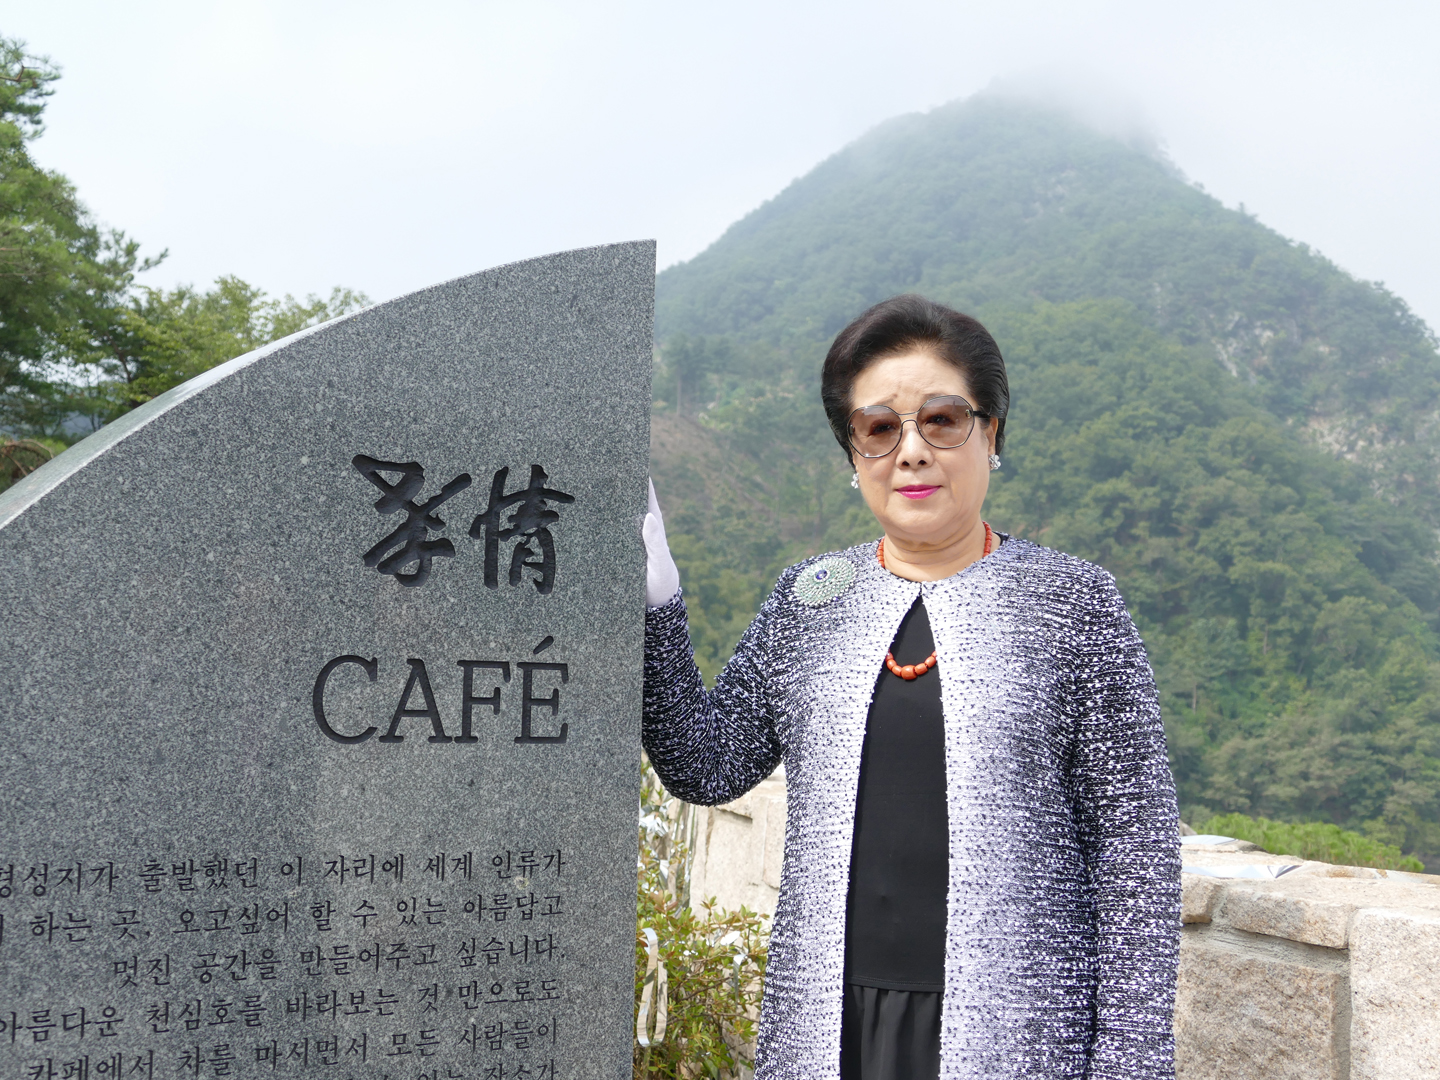 Dedication of Hyo Jeong Café (September 9)